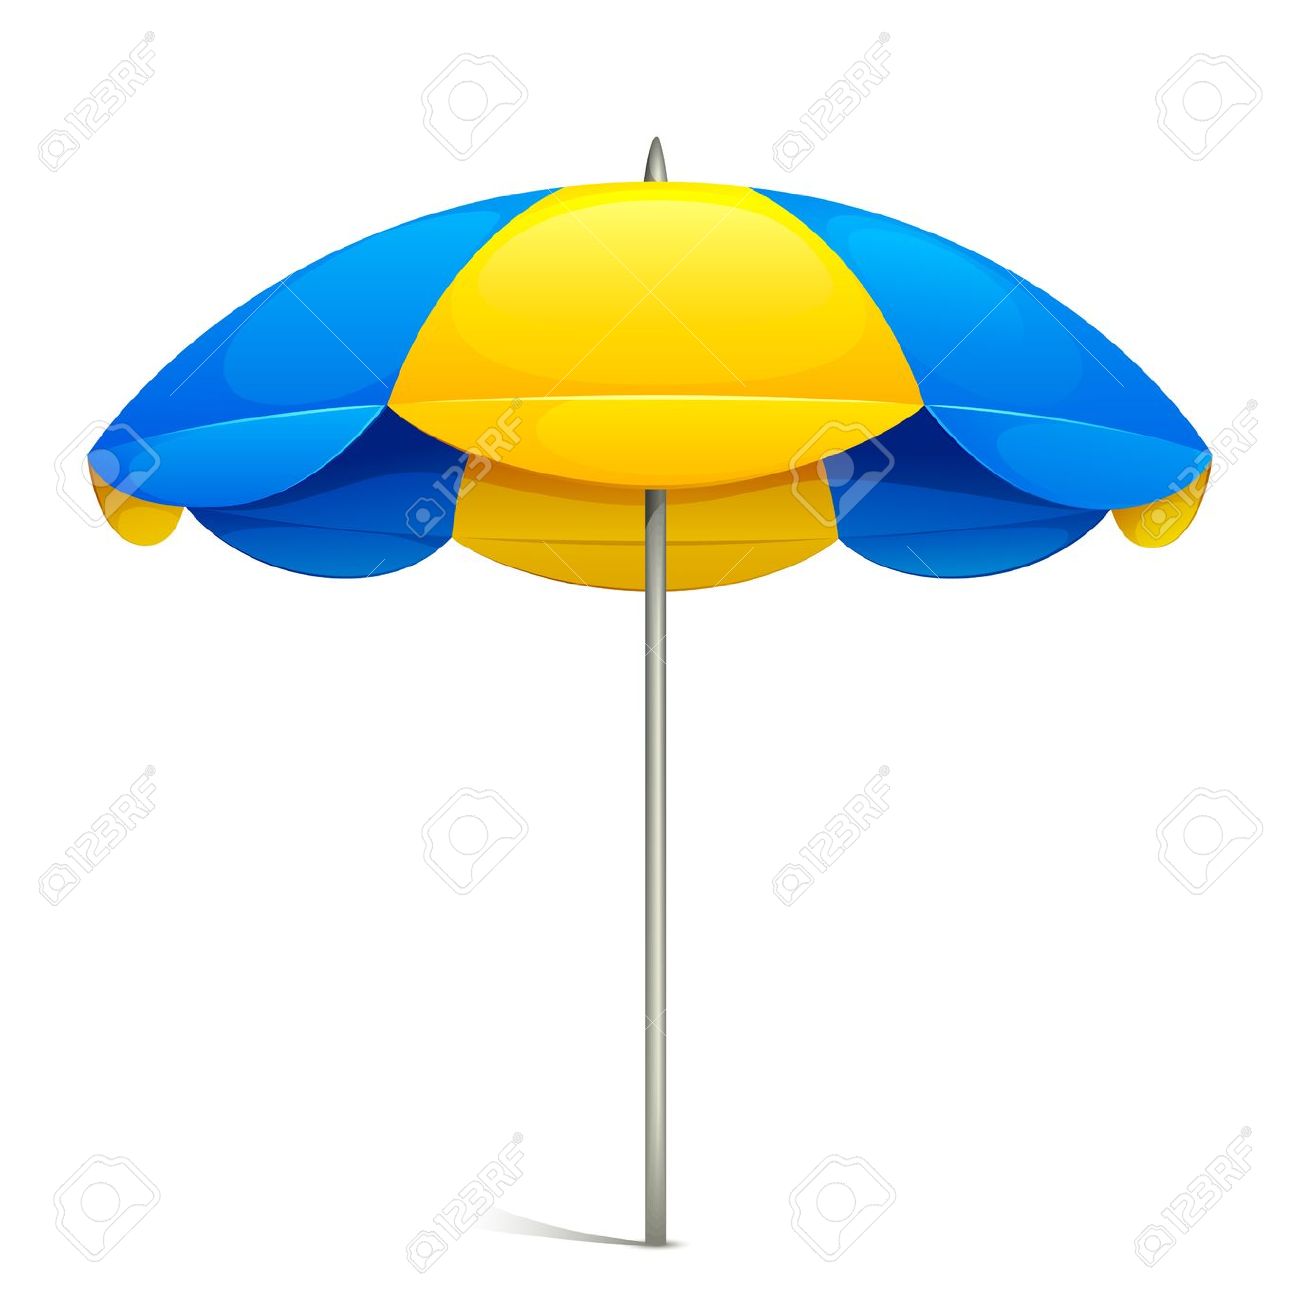 beach umbrella clipart - photo #46